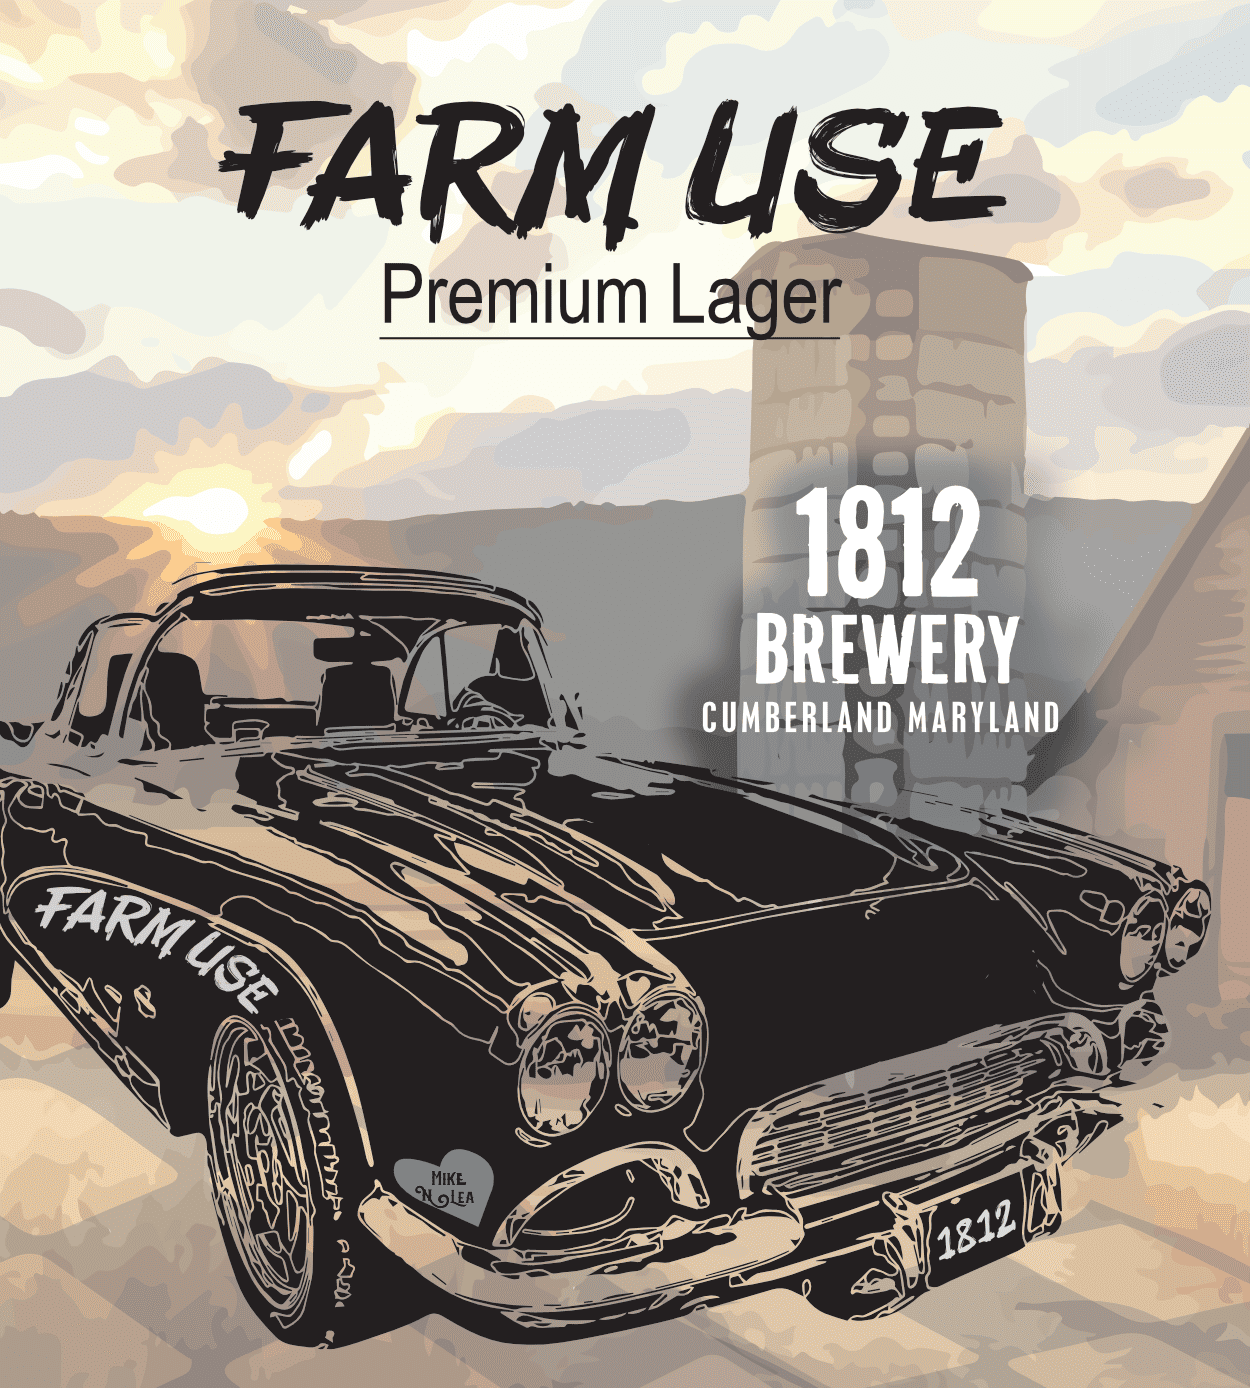 Farm Use Premium Lager beer label.